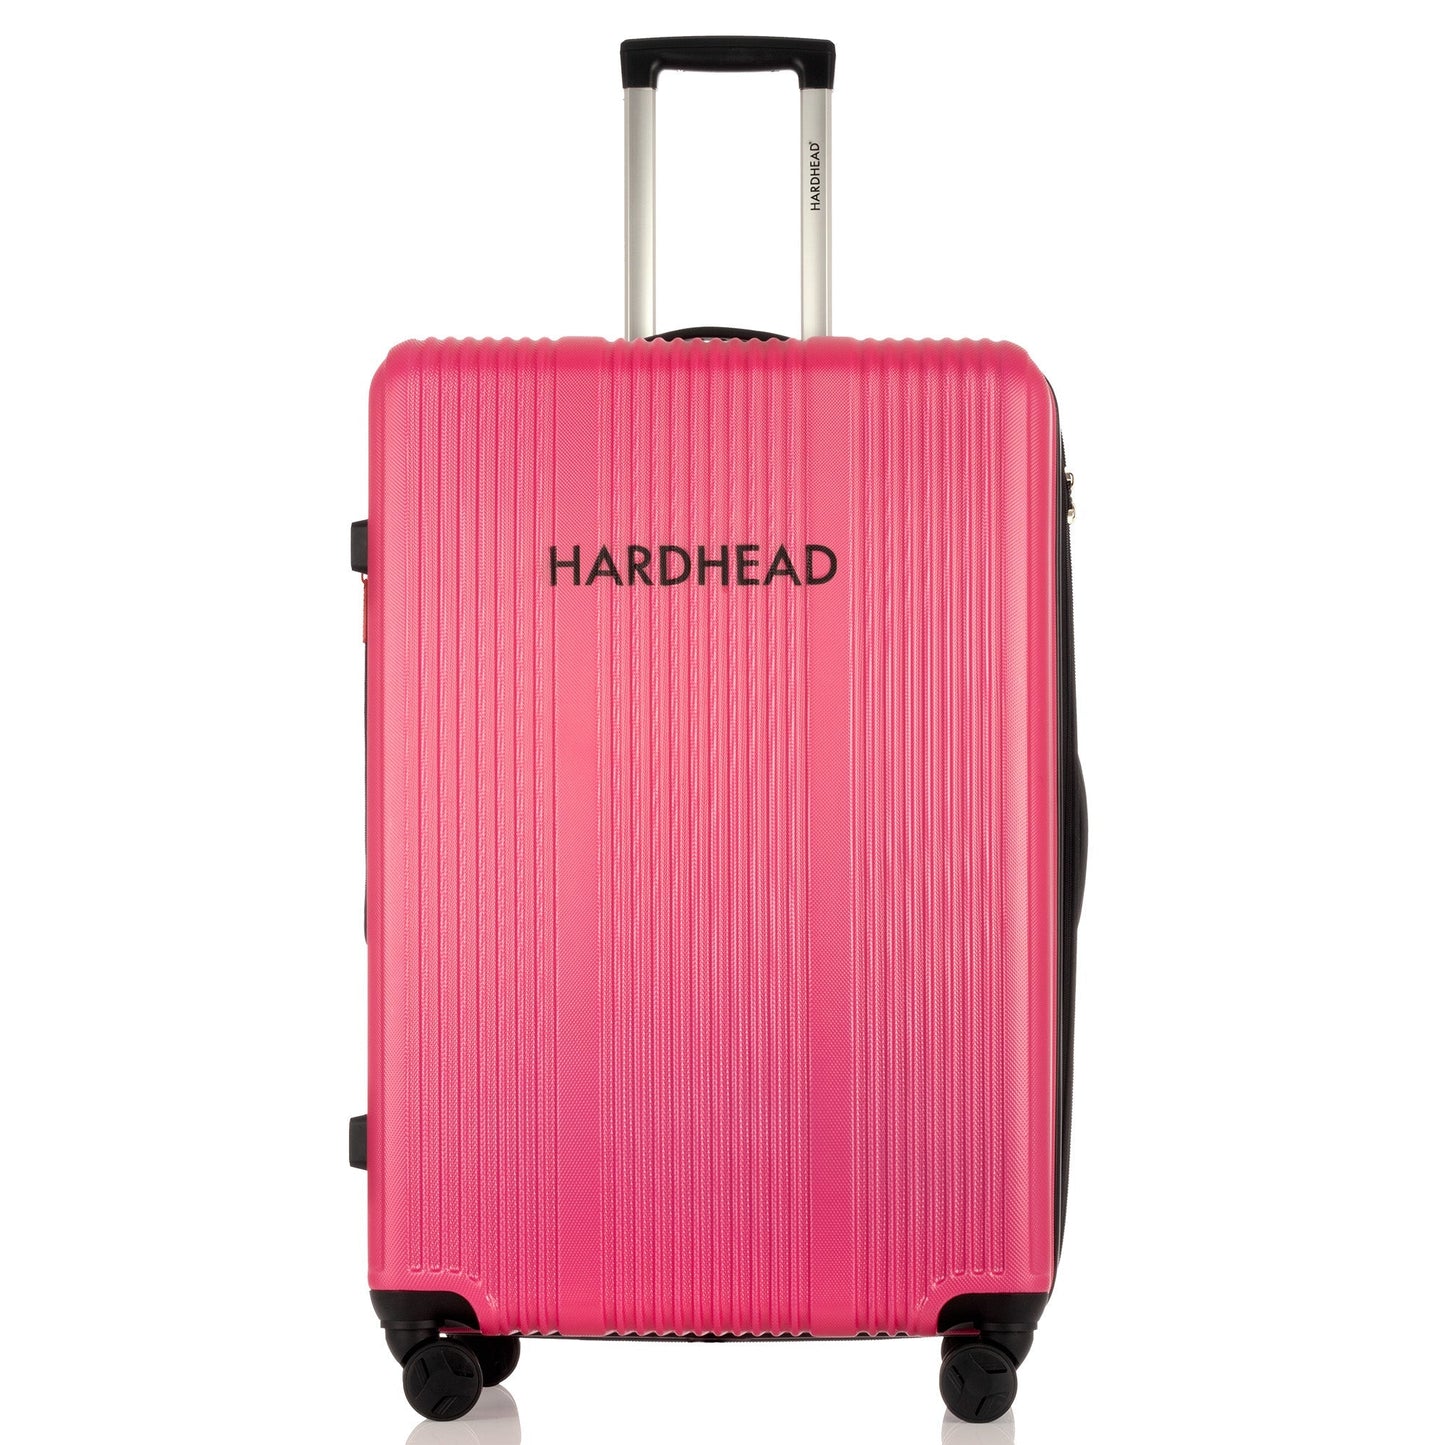 Nayax Collection Pink Luggage 3 Piece Set (20/24/28") Suitcase Lock Spinner Hardshell